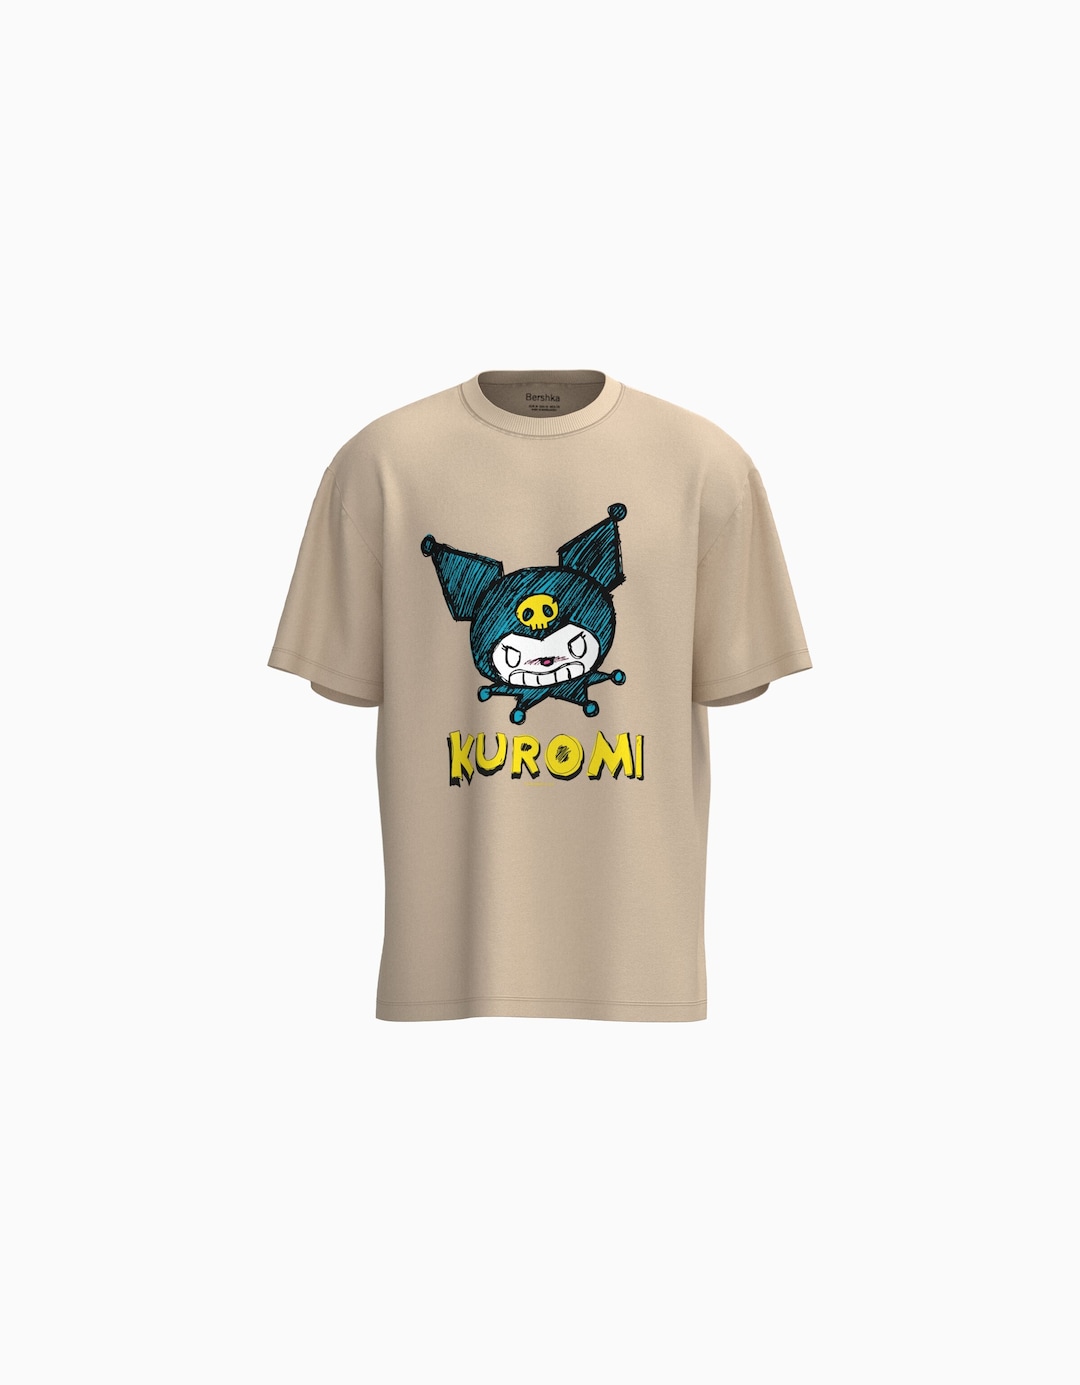 Camiseta Kuromi manga corta boxy fit print